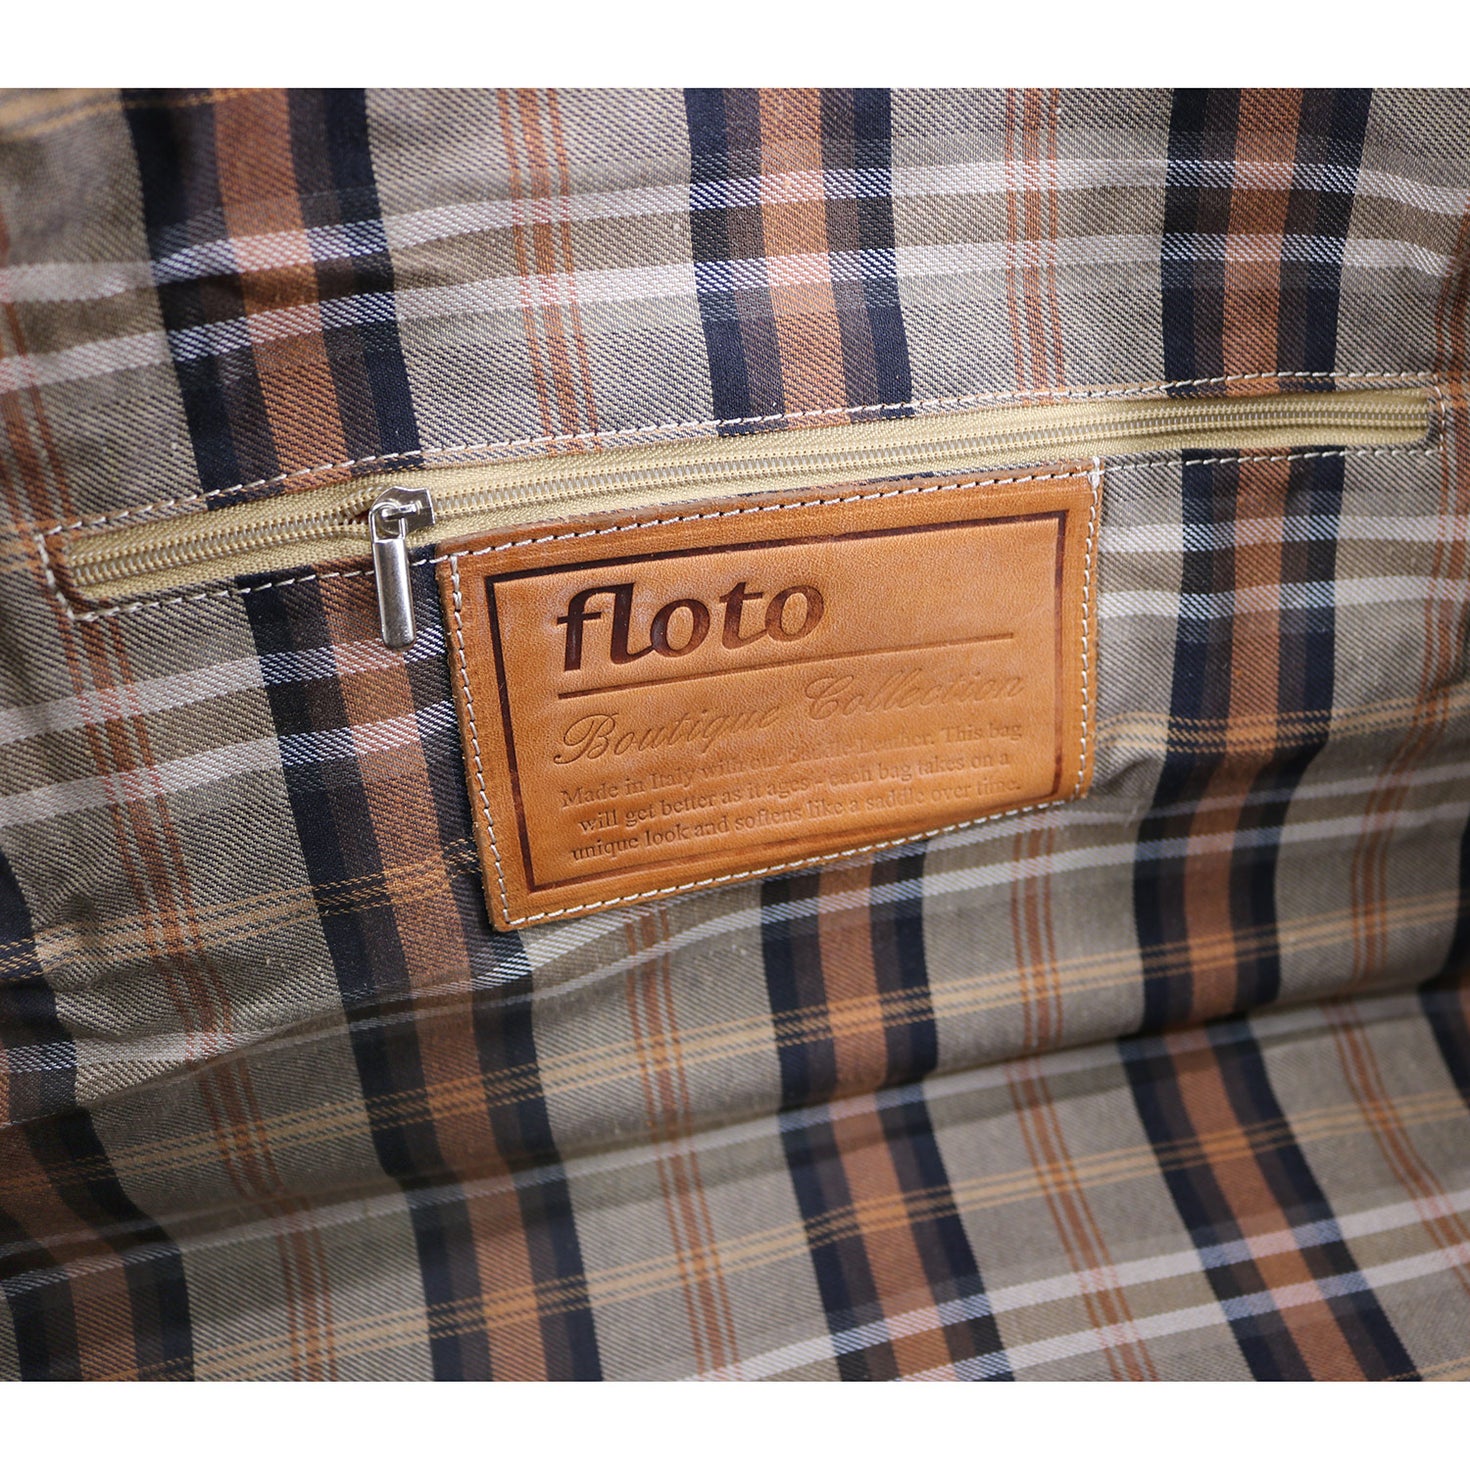 Floto Parma Italian Leather Duffle Travel Bag Carryon Suitcase Luggage